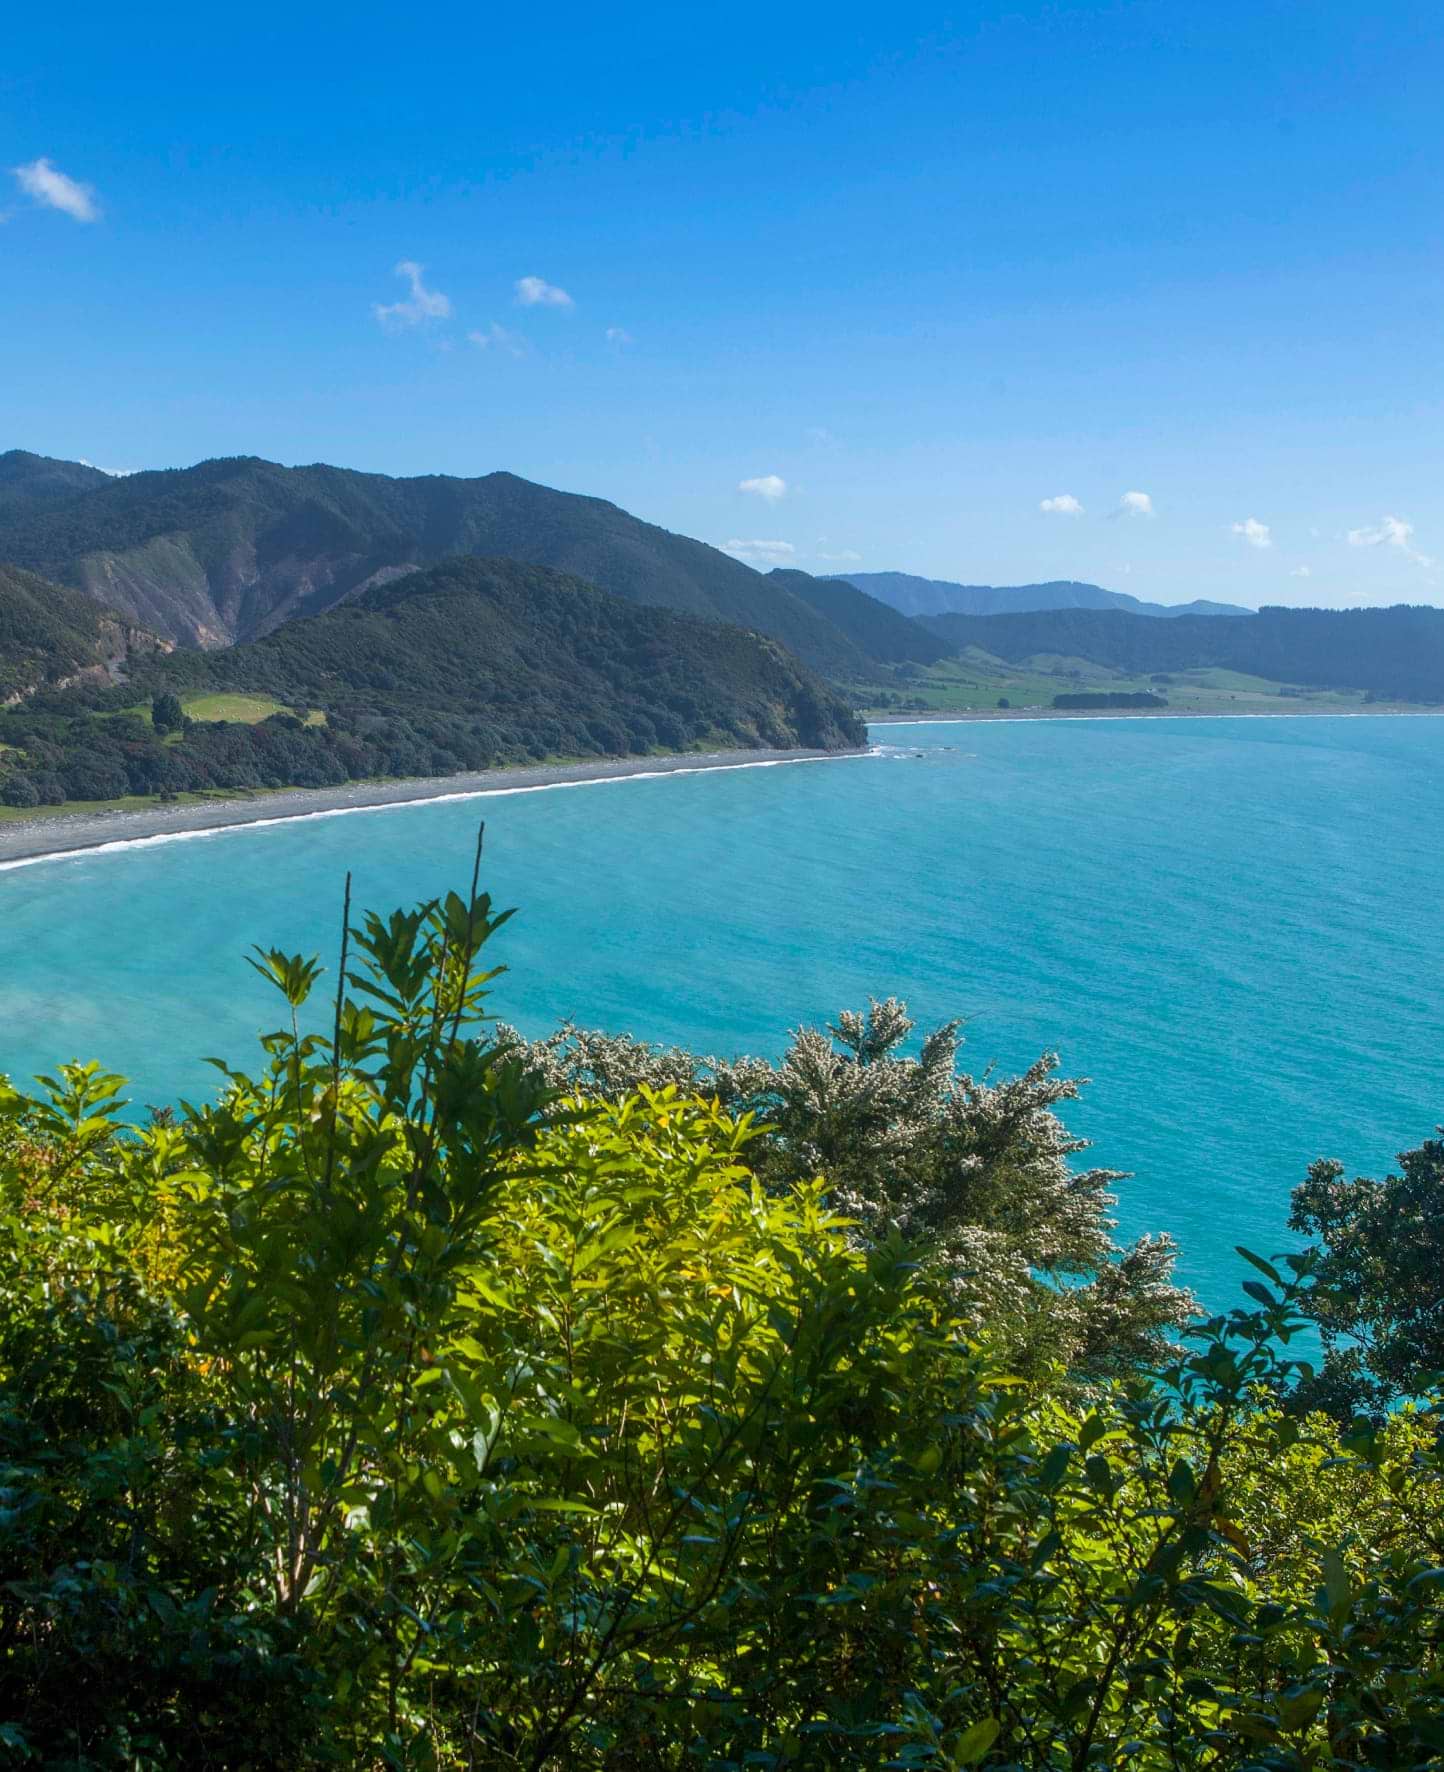 Maori and Australian Shores - Leafy hills and lake